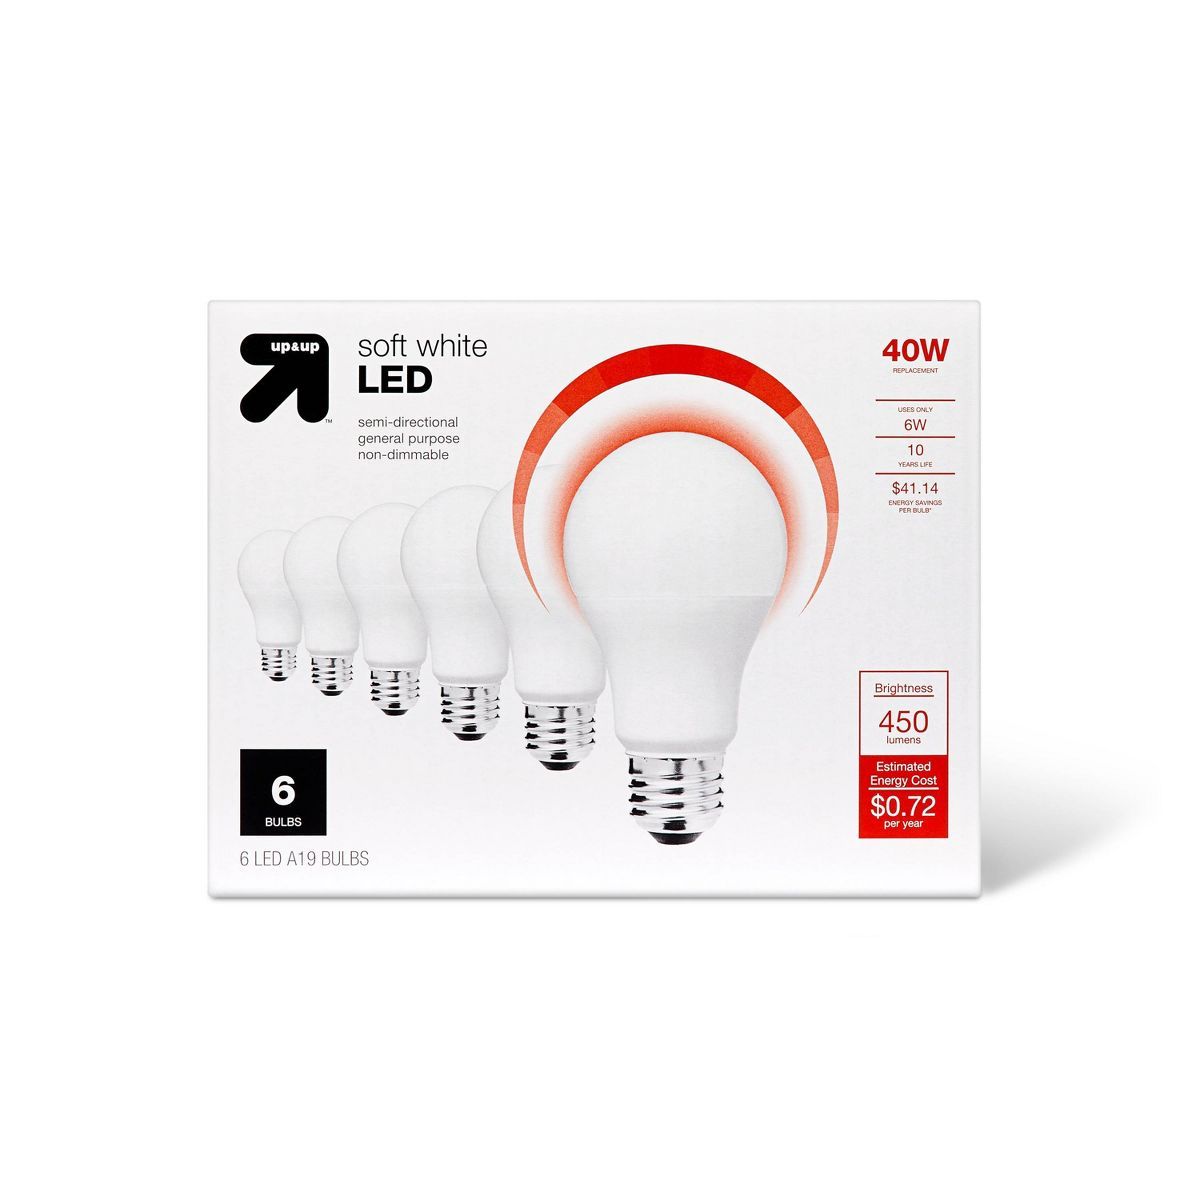 LED 40W 6pk Light Bulbs Soft White - up & up™ | Target